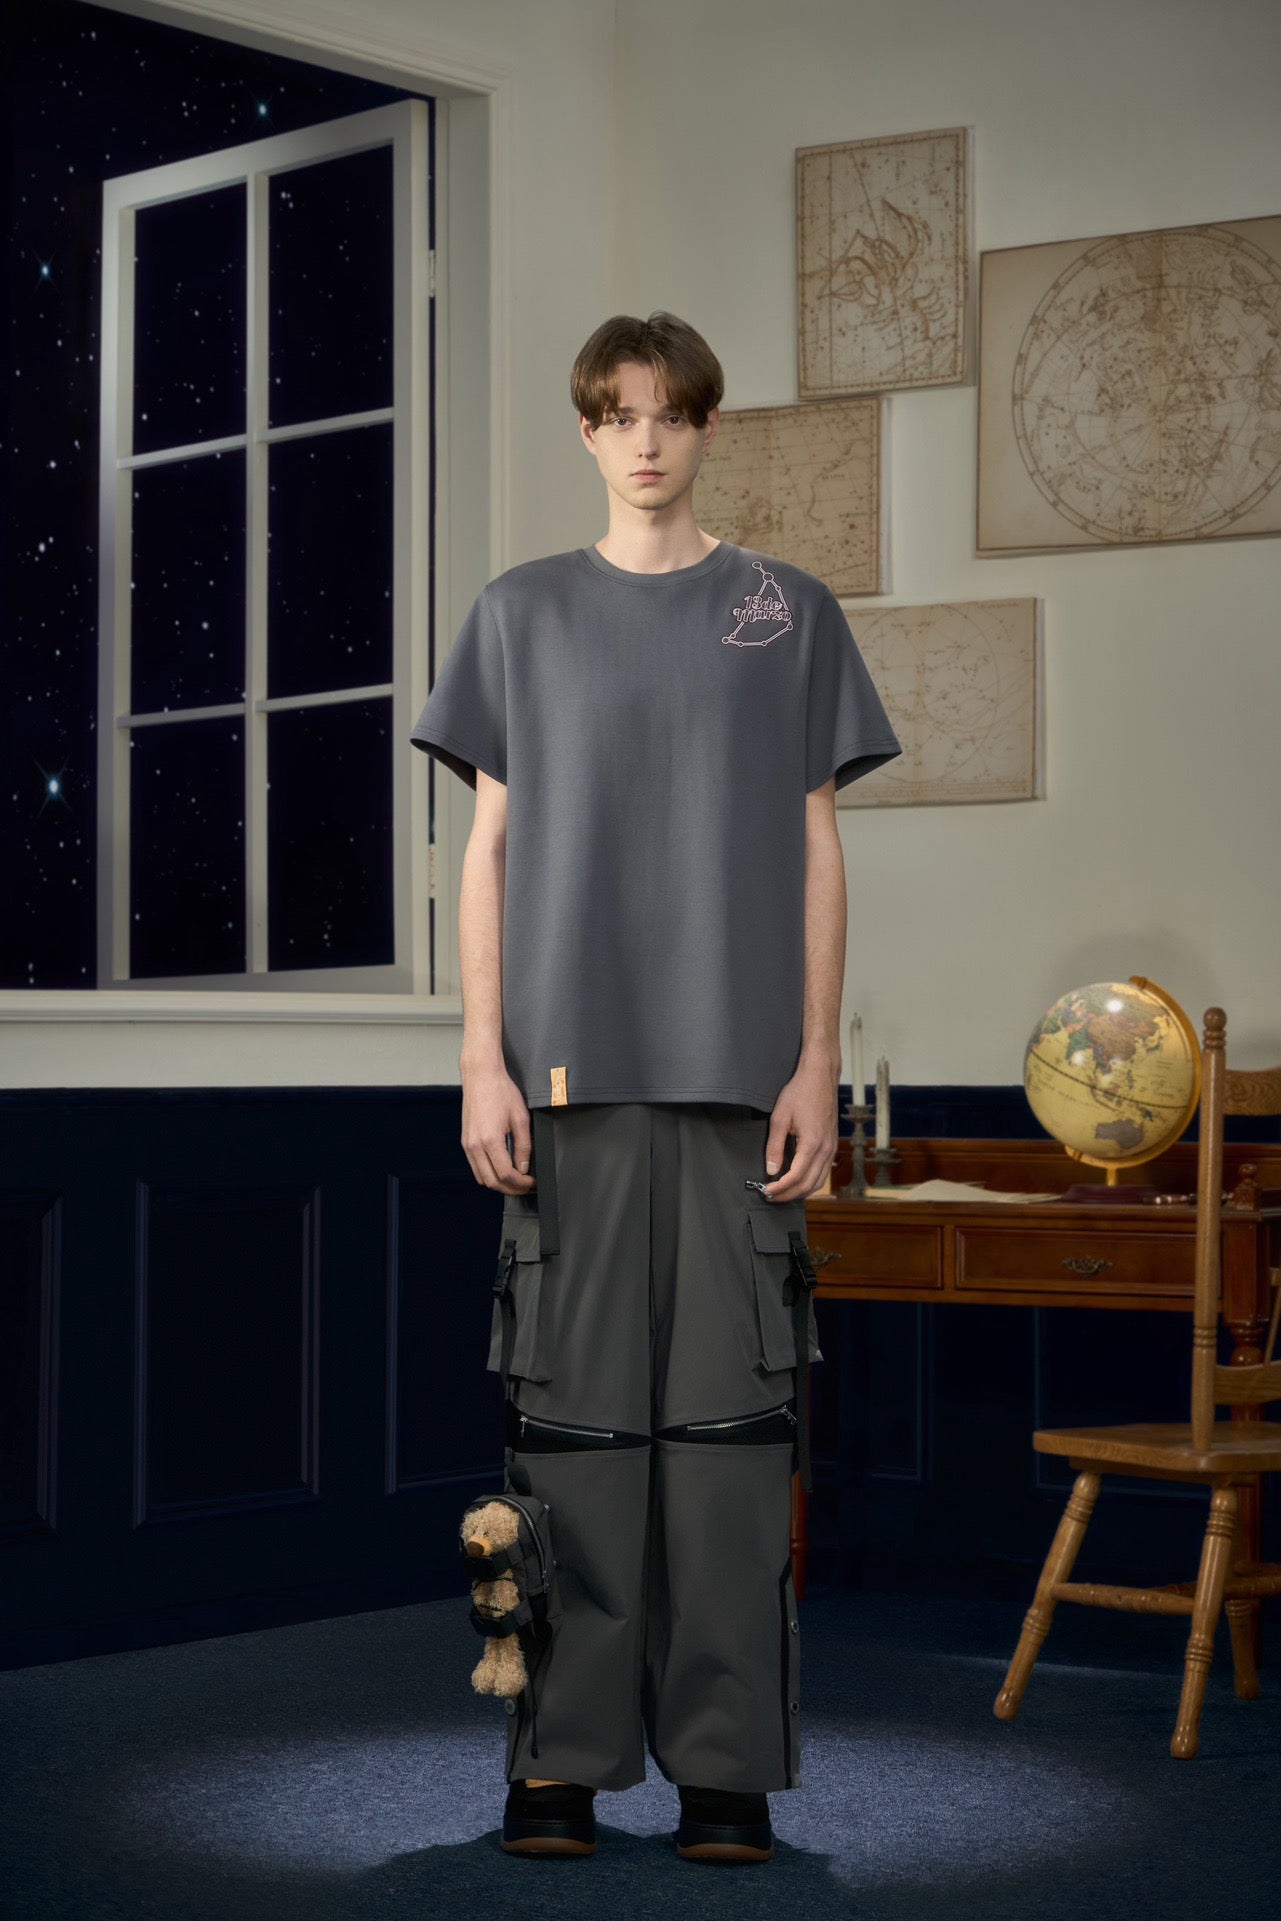 13DE MARZO Constellation Series T-shirt Capricorn